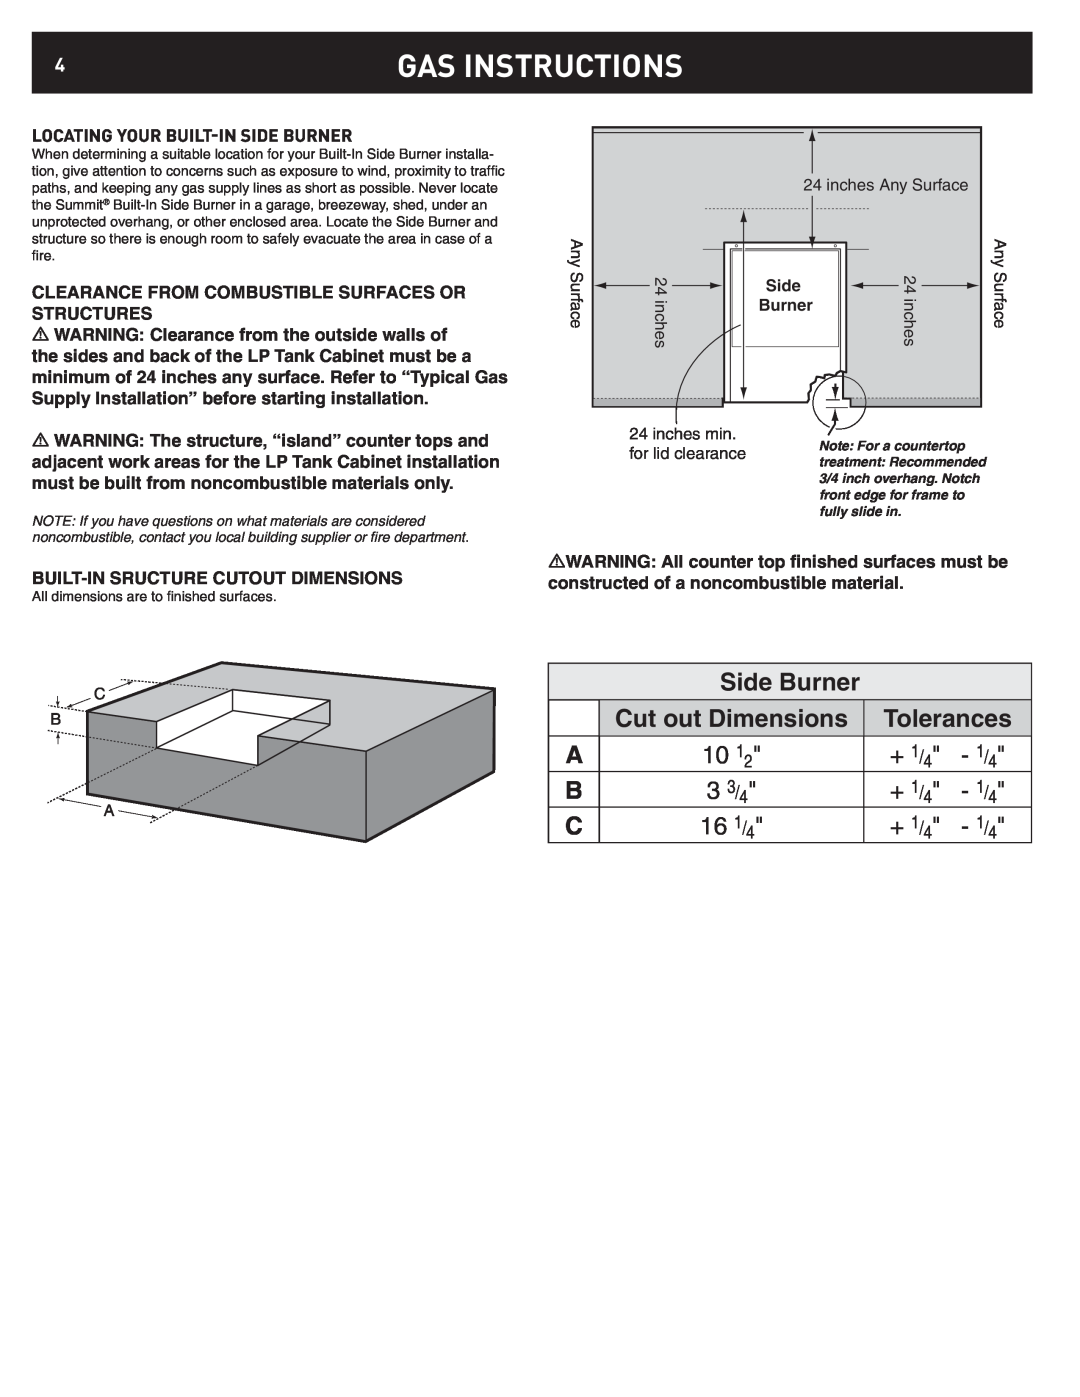 Weber 42377 manual Gas Instructions, Side Burner, Cut out Dimensions, Tolerances, + 1/4 - 1/4, 3 3/4, 16 1/4 